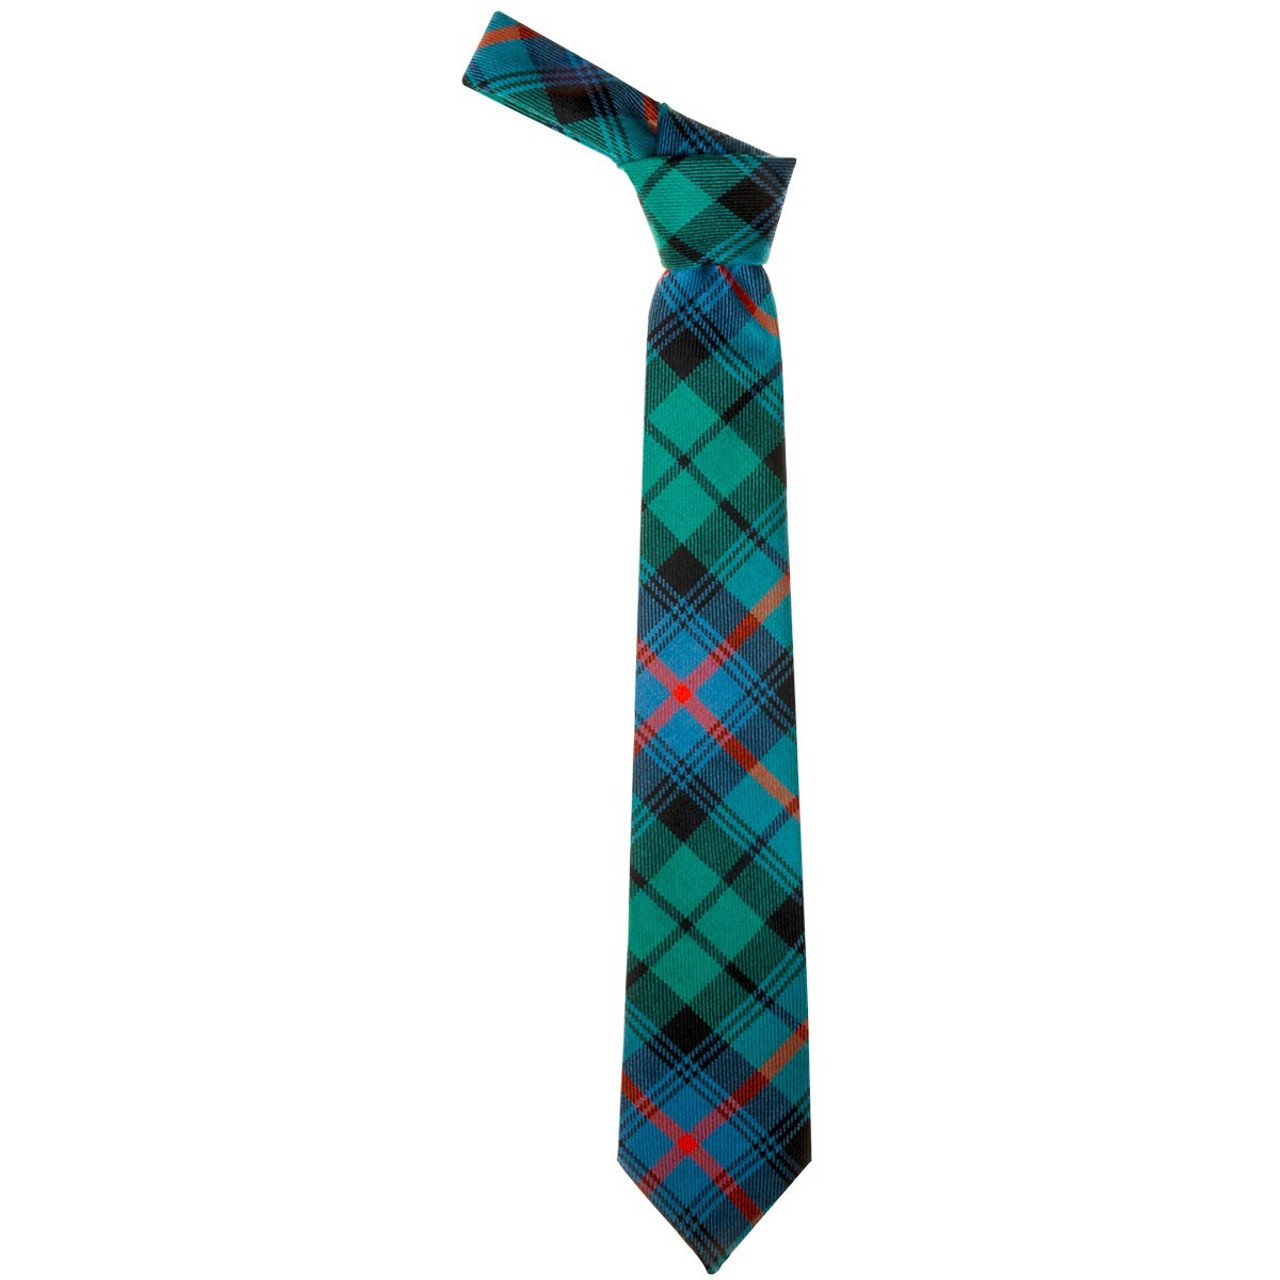 Clan Tie Urquhart Broad Red Ancient Tartan Pure Wool Scottish Handmade Necktie